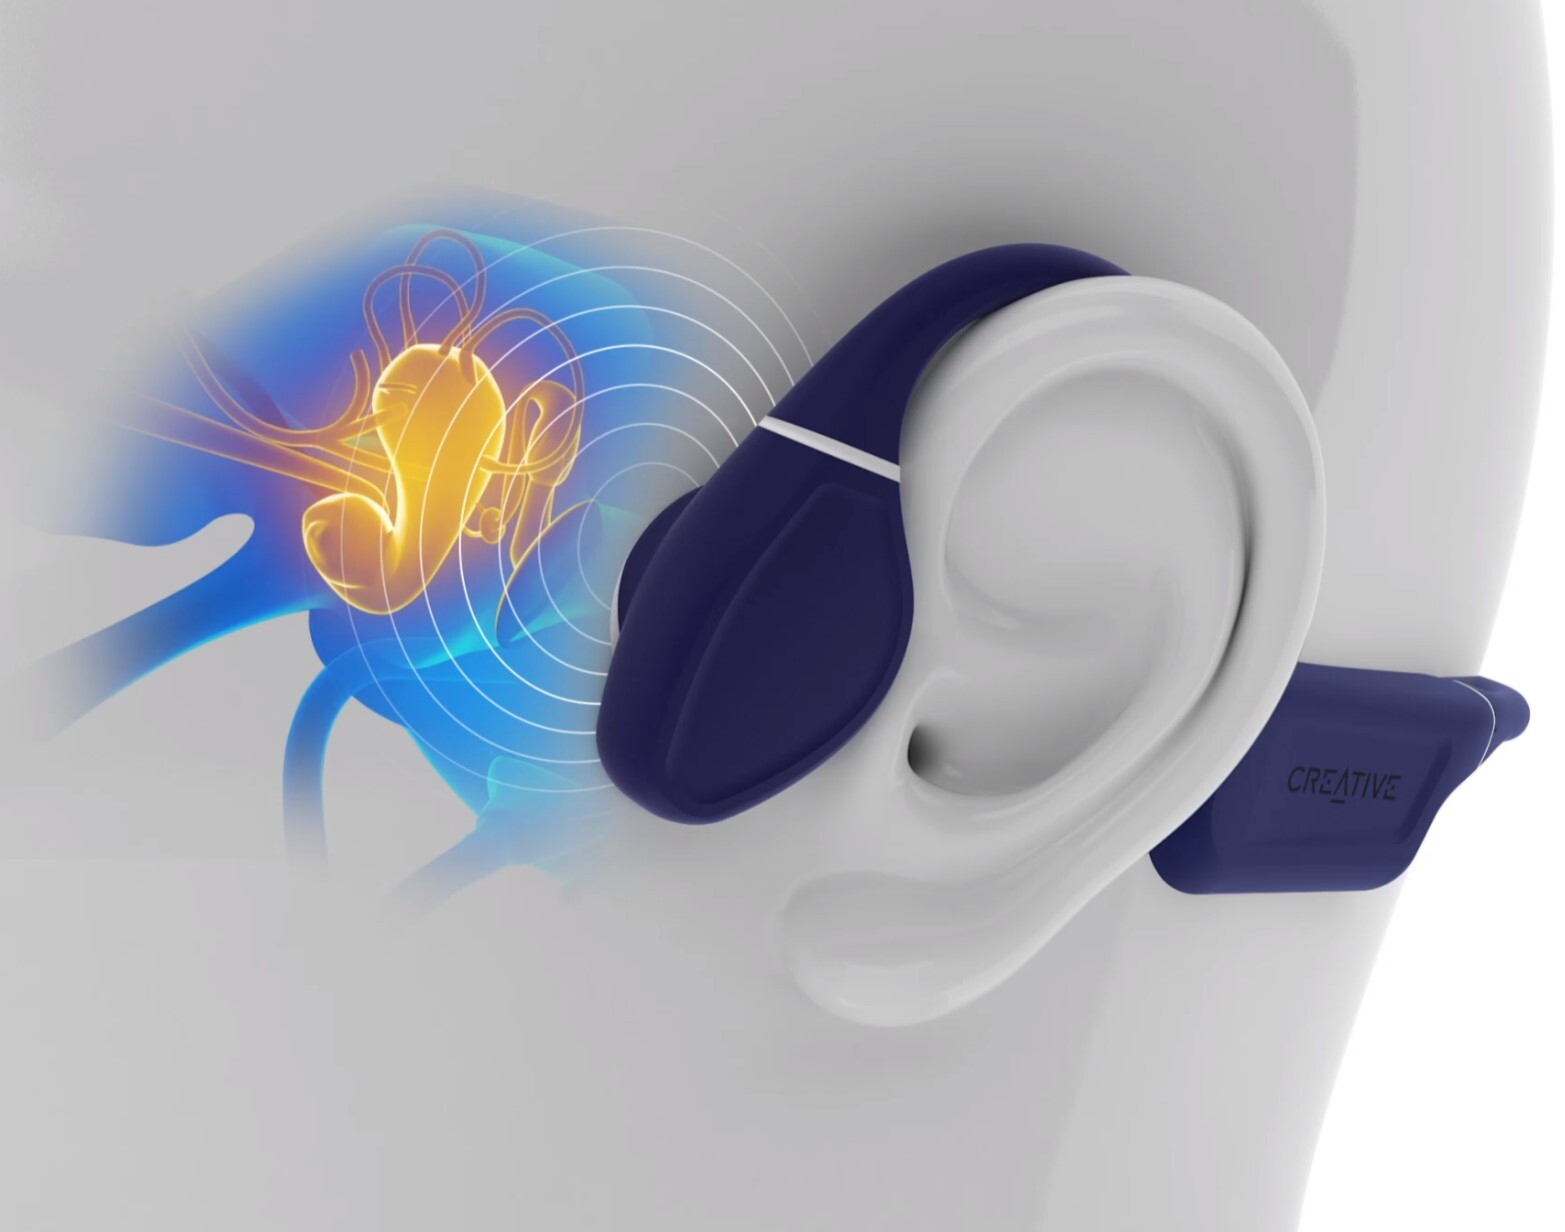 Creative Announces the Outlier Free Pro Bone-conduction Headphones